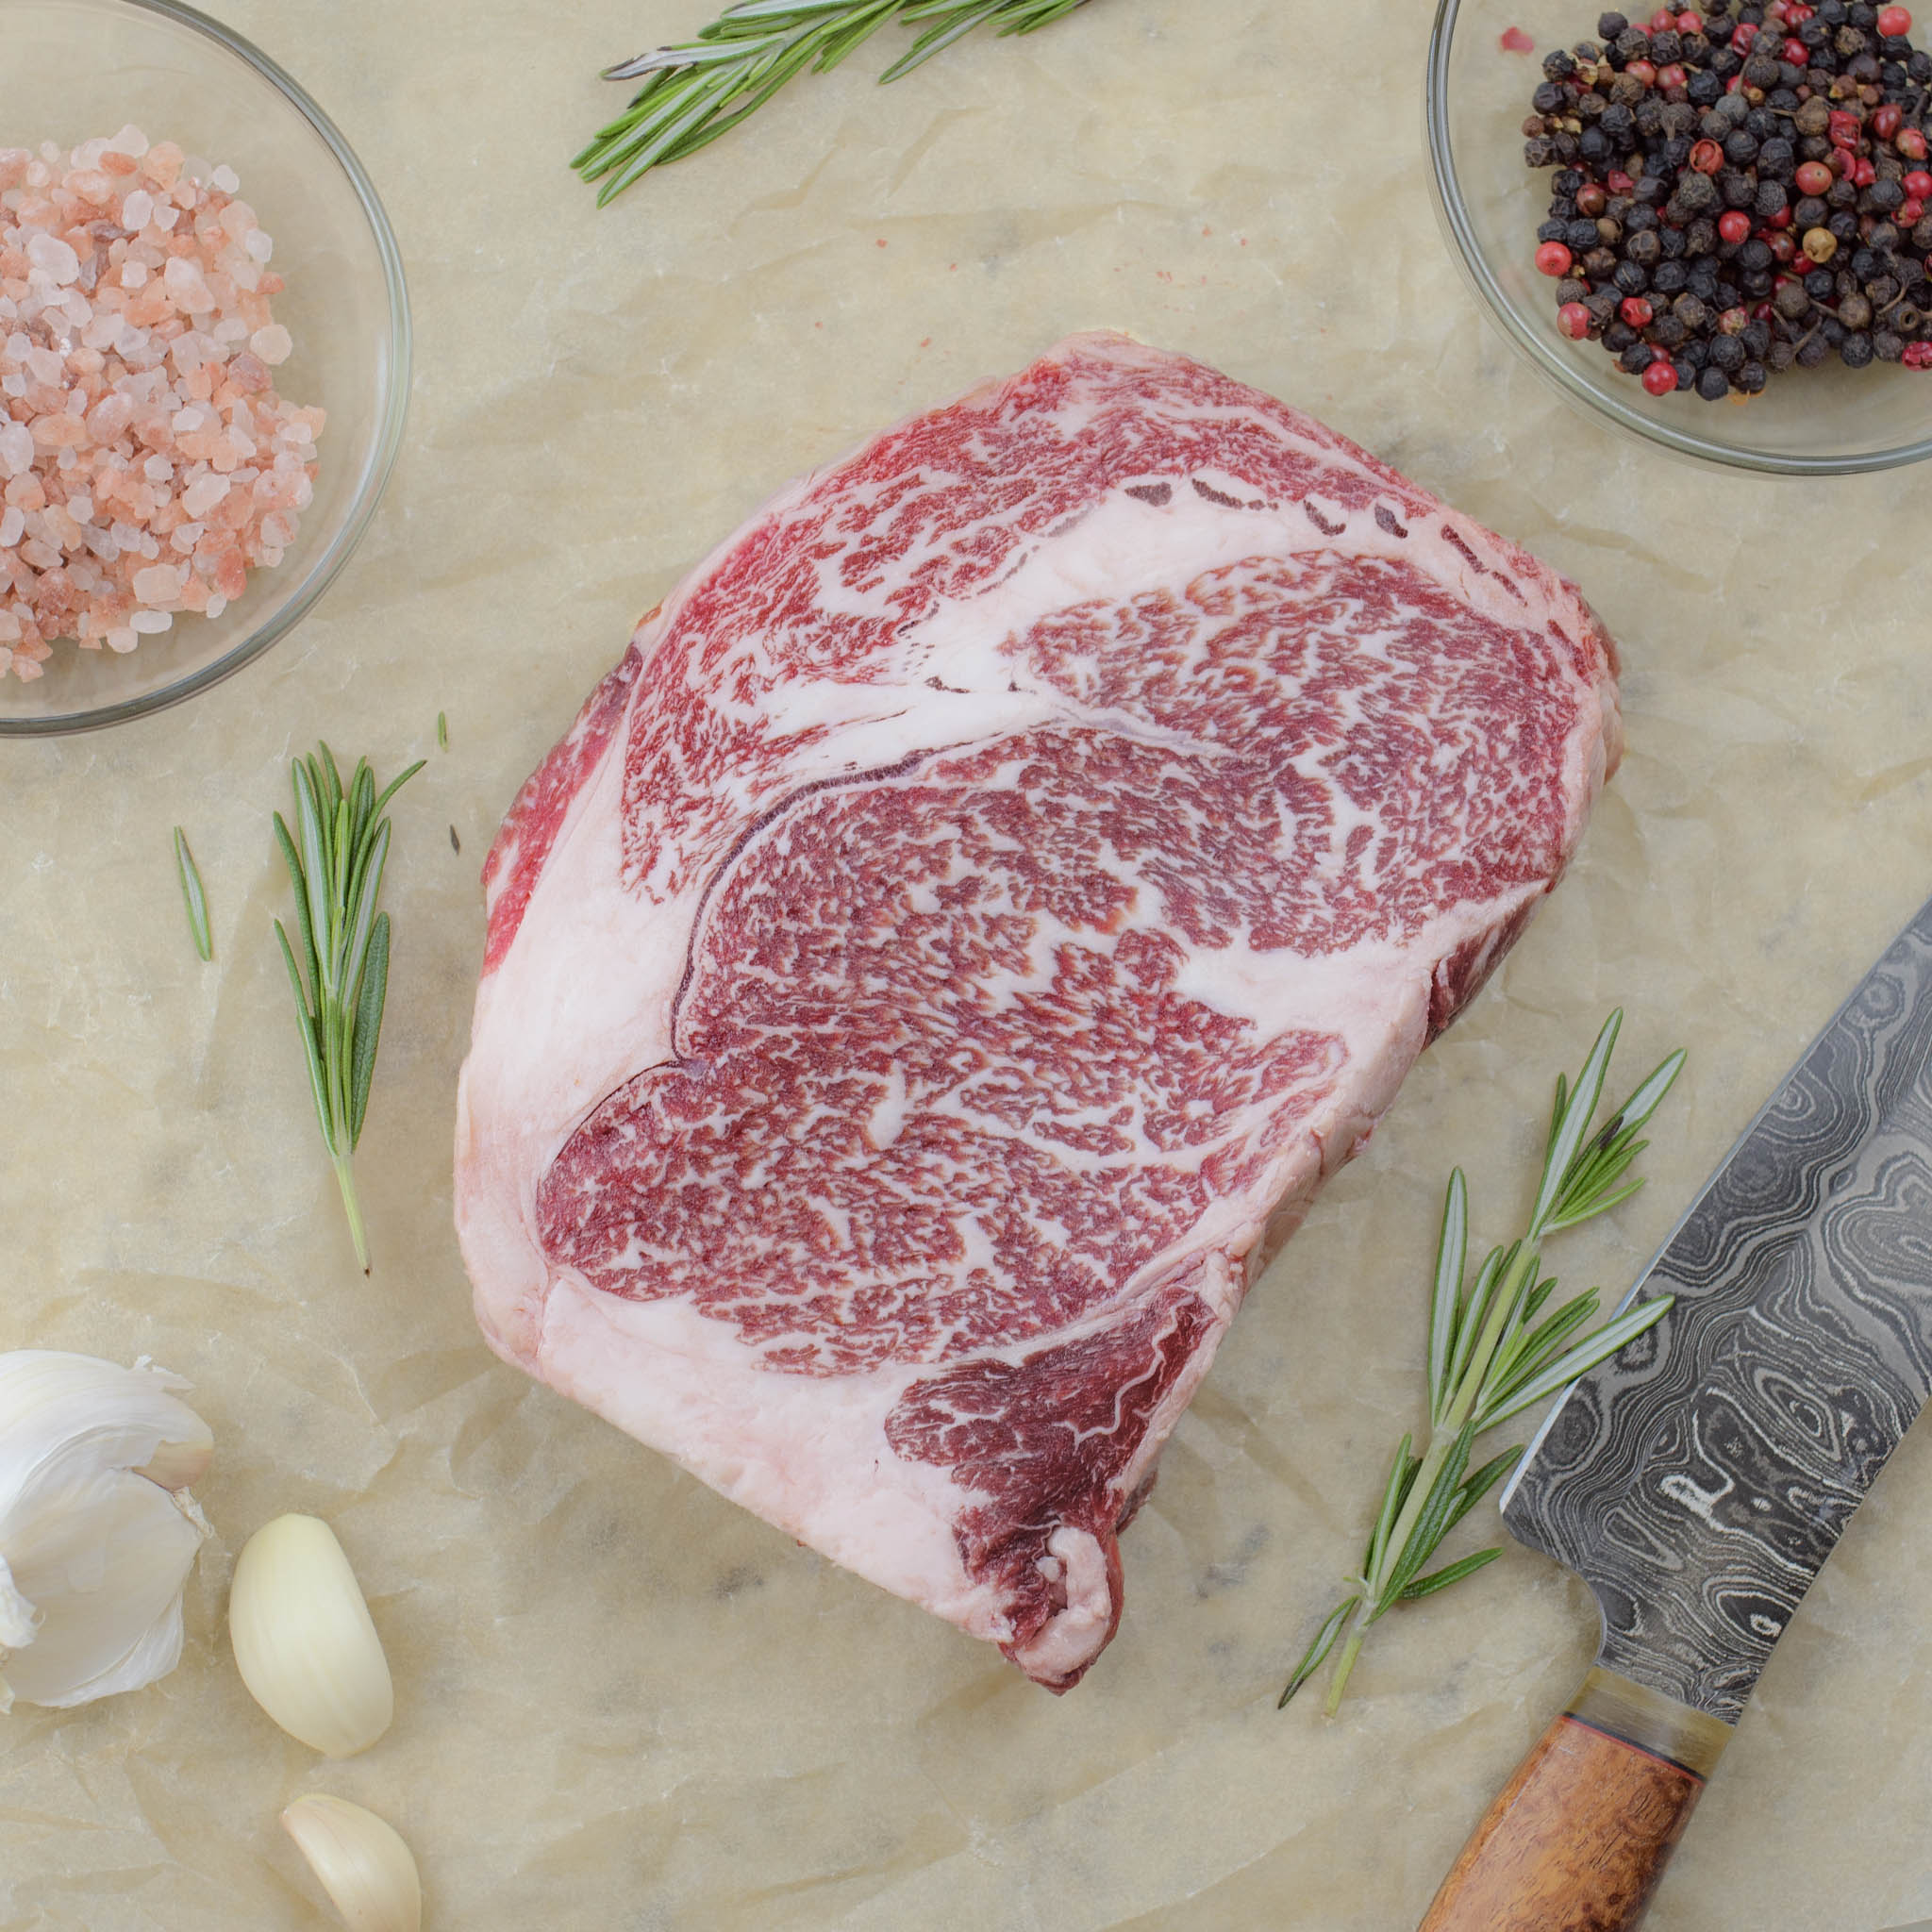 Ribeye Steak – 100% Full Blood Wagyu Beef